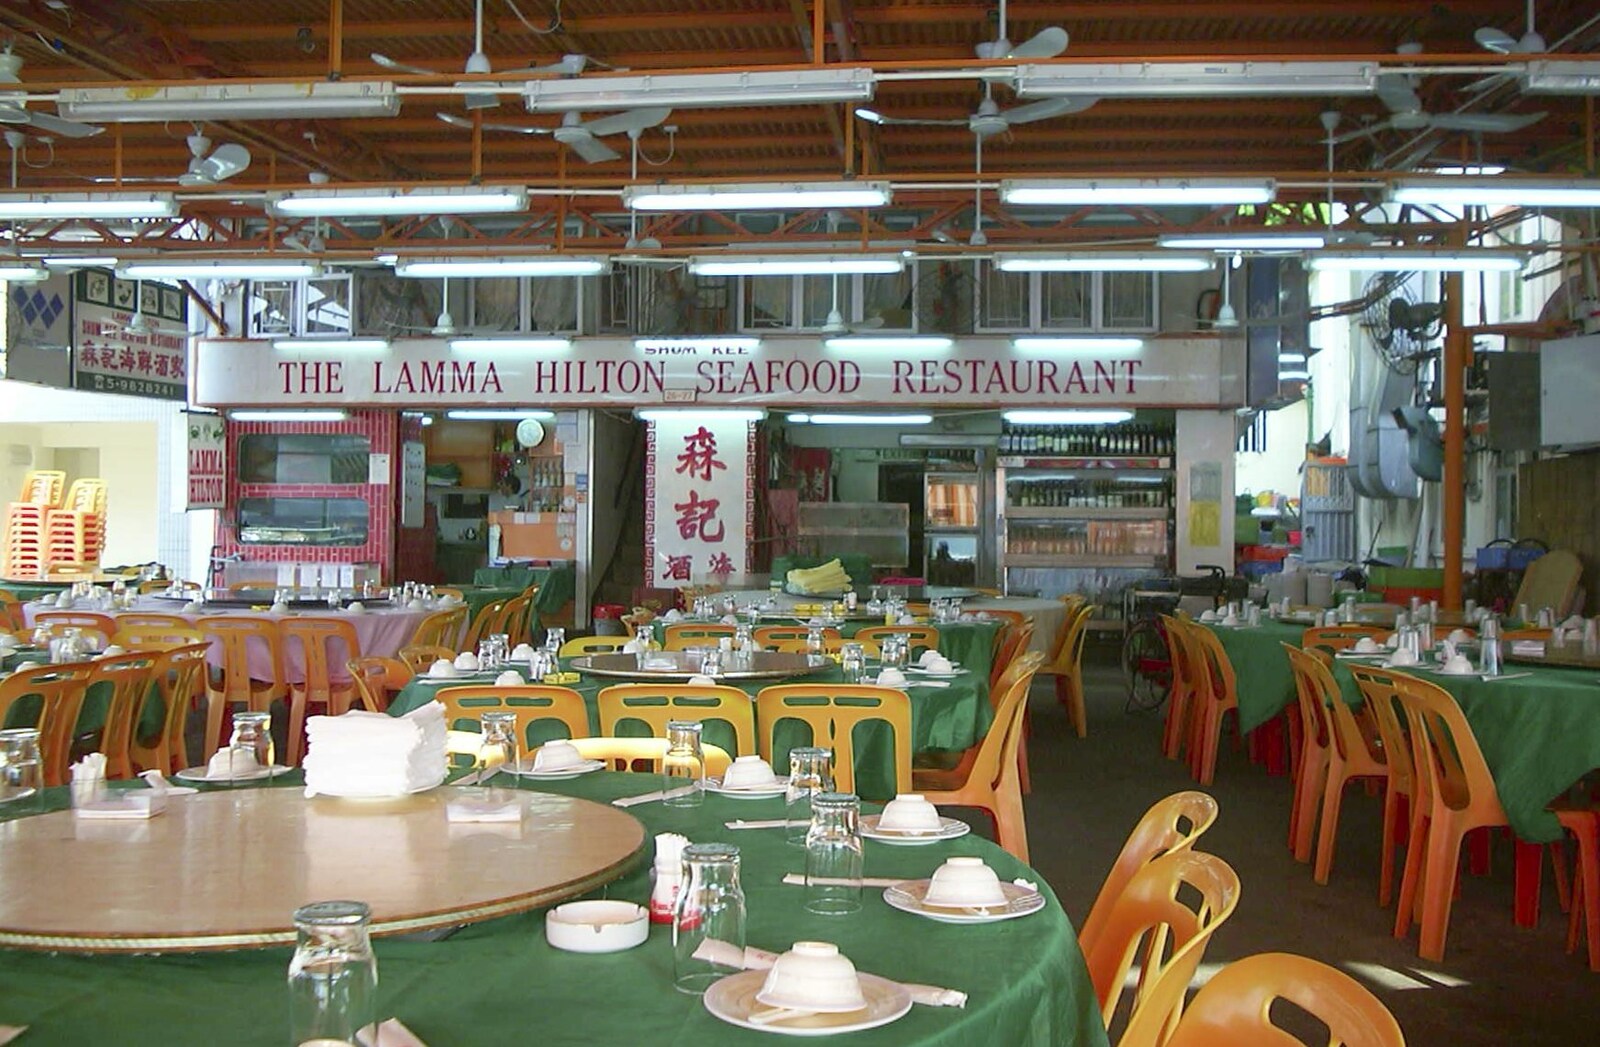 Lamma Island, Hong Kong, China - 20th August 2001: Inside the Lamma Hilton